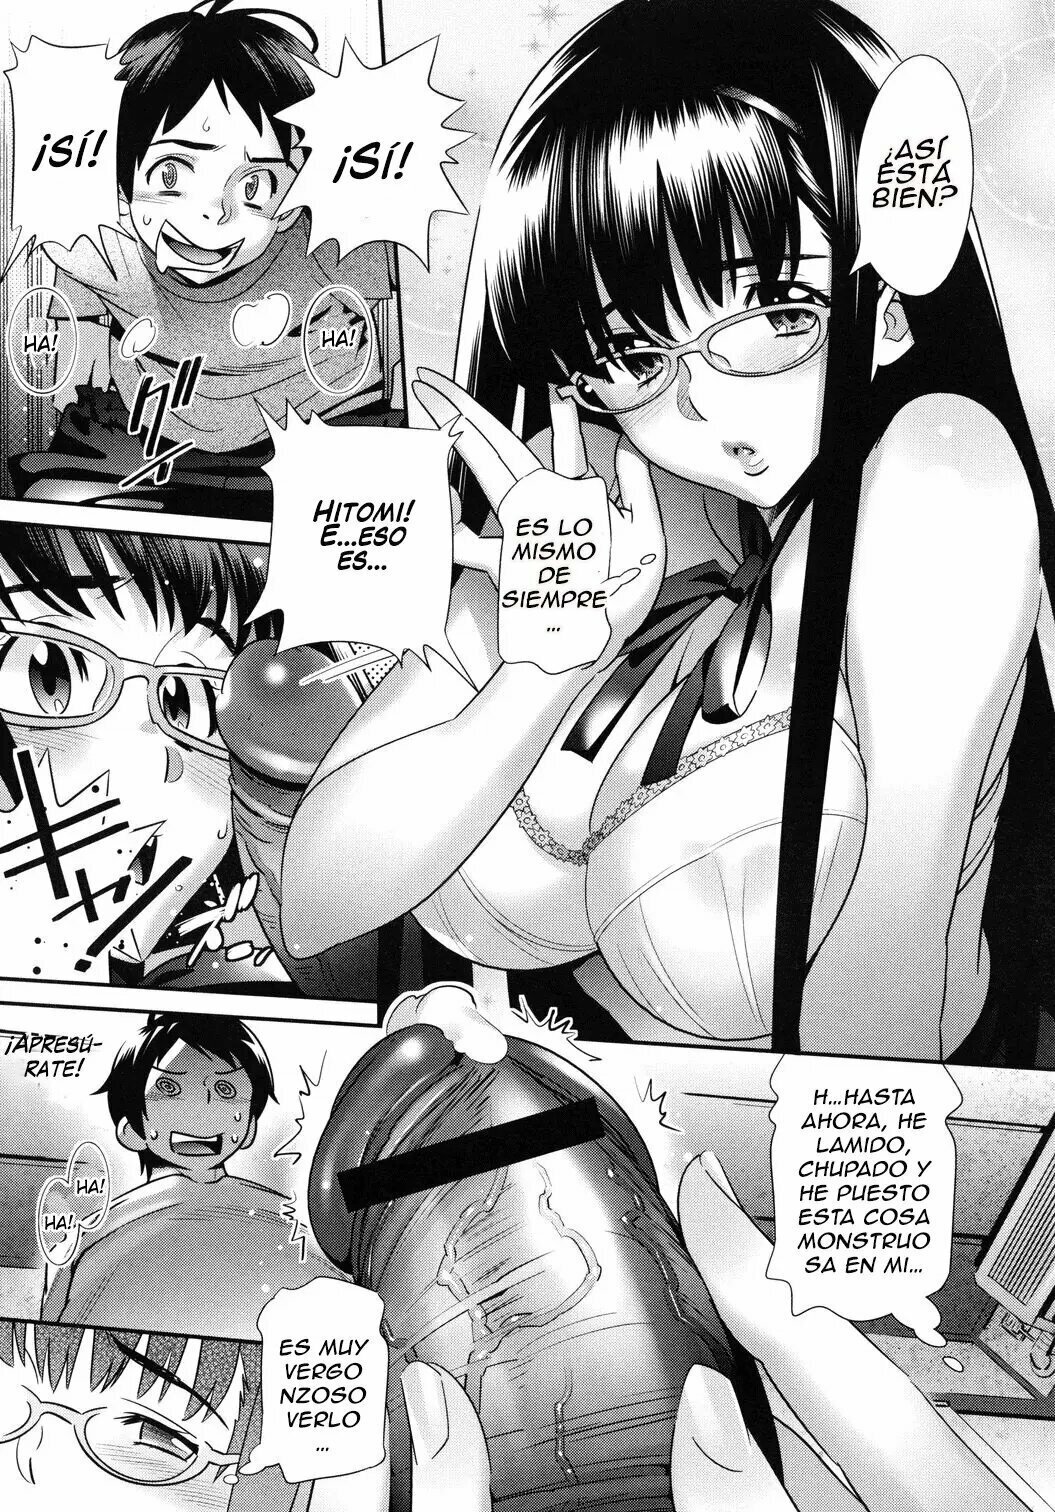 Megane no Megami #1 (Poca censura) - 12